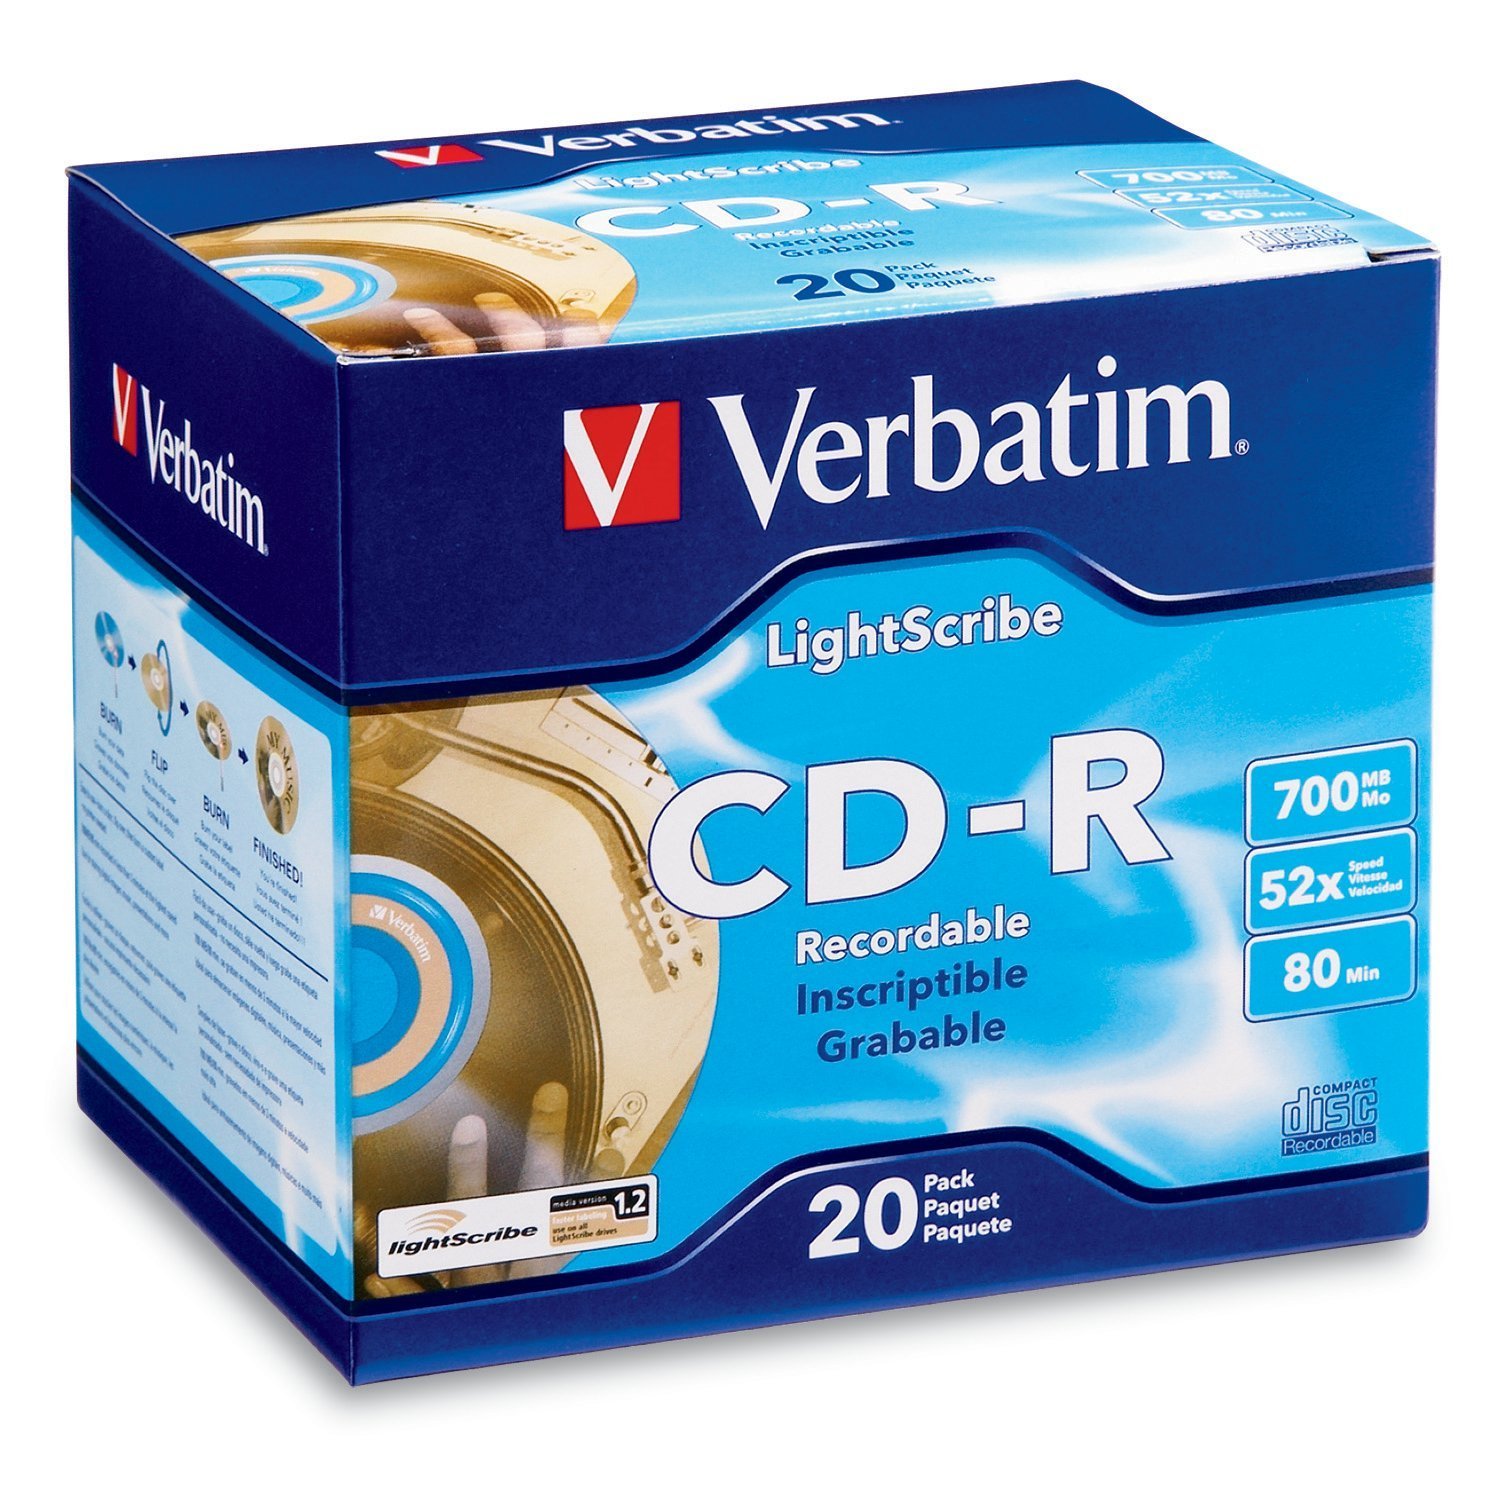 Verbatim 700 MB 52x LightScribe Gold Recordable Discs CD-R, 20-Disc Slim Case 95092